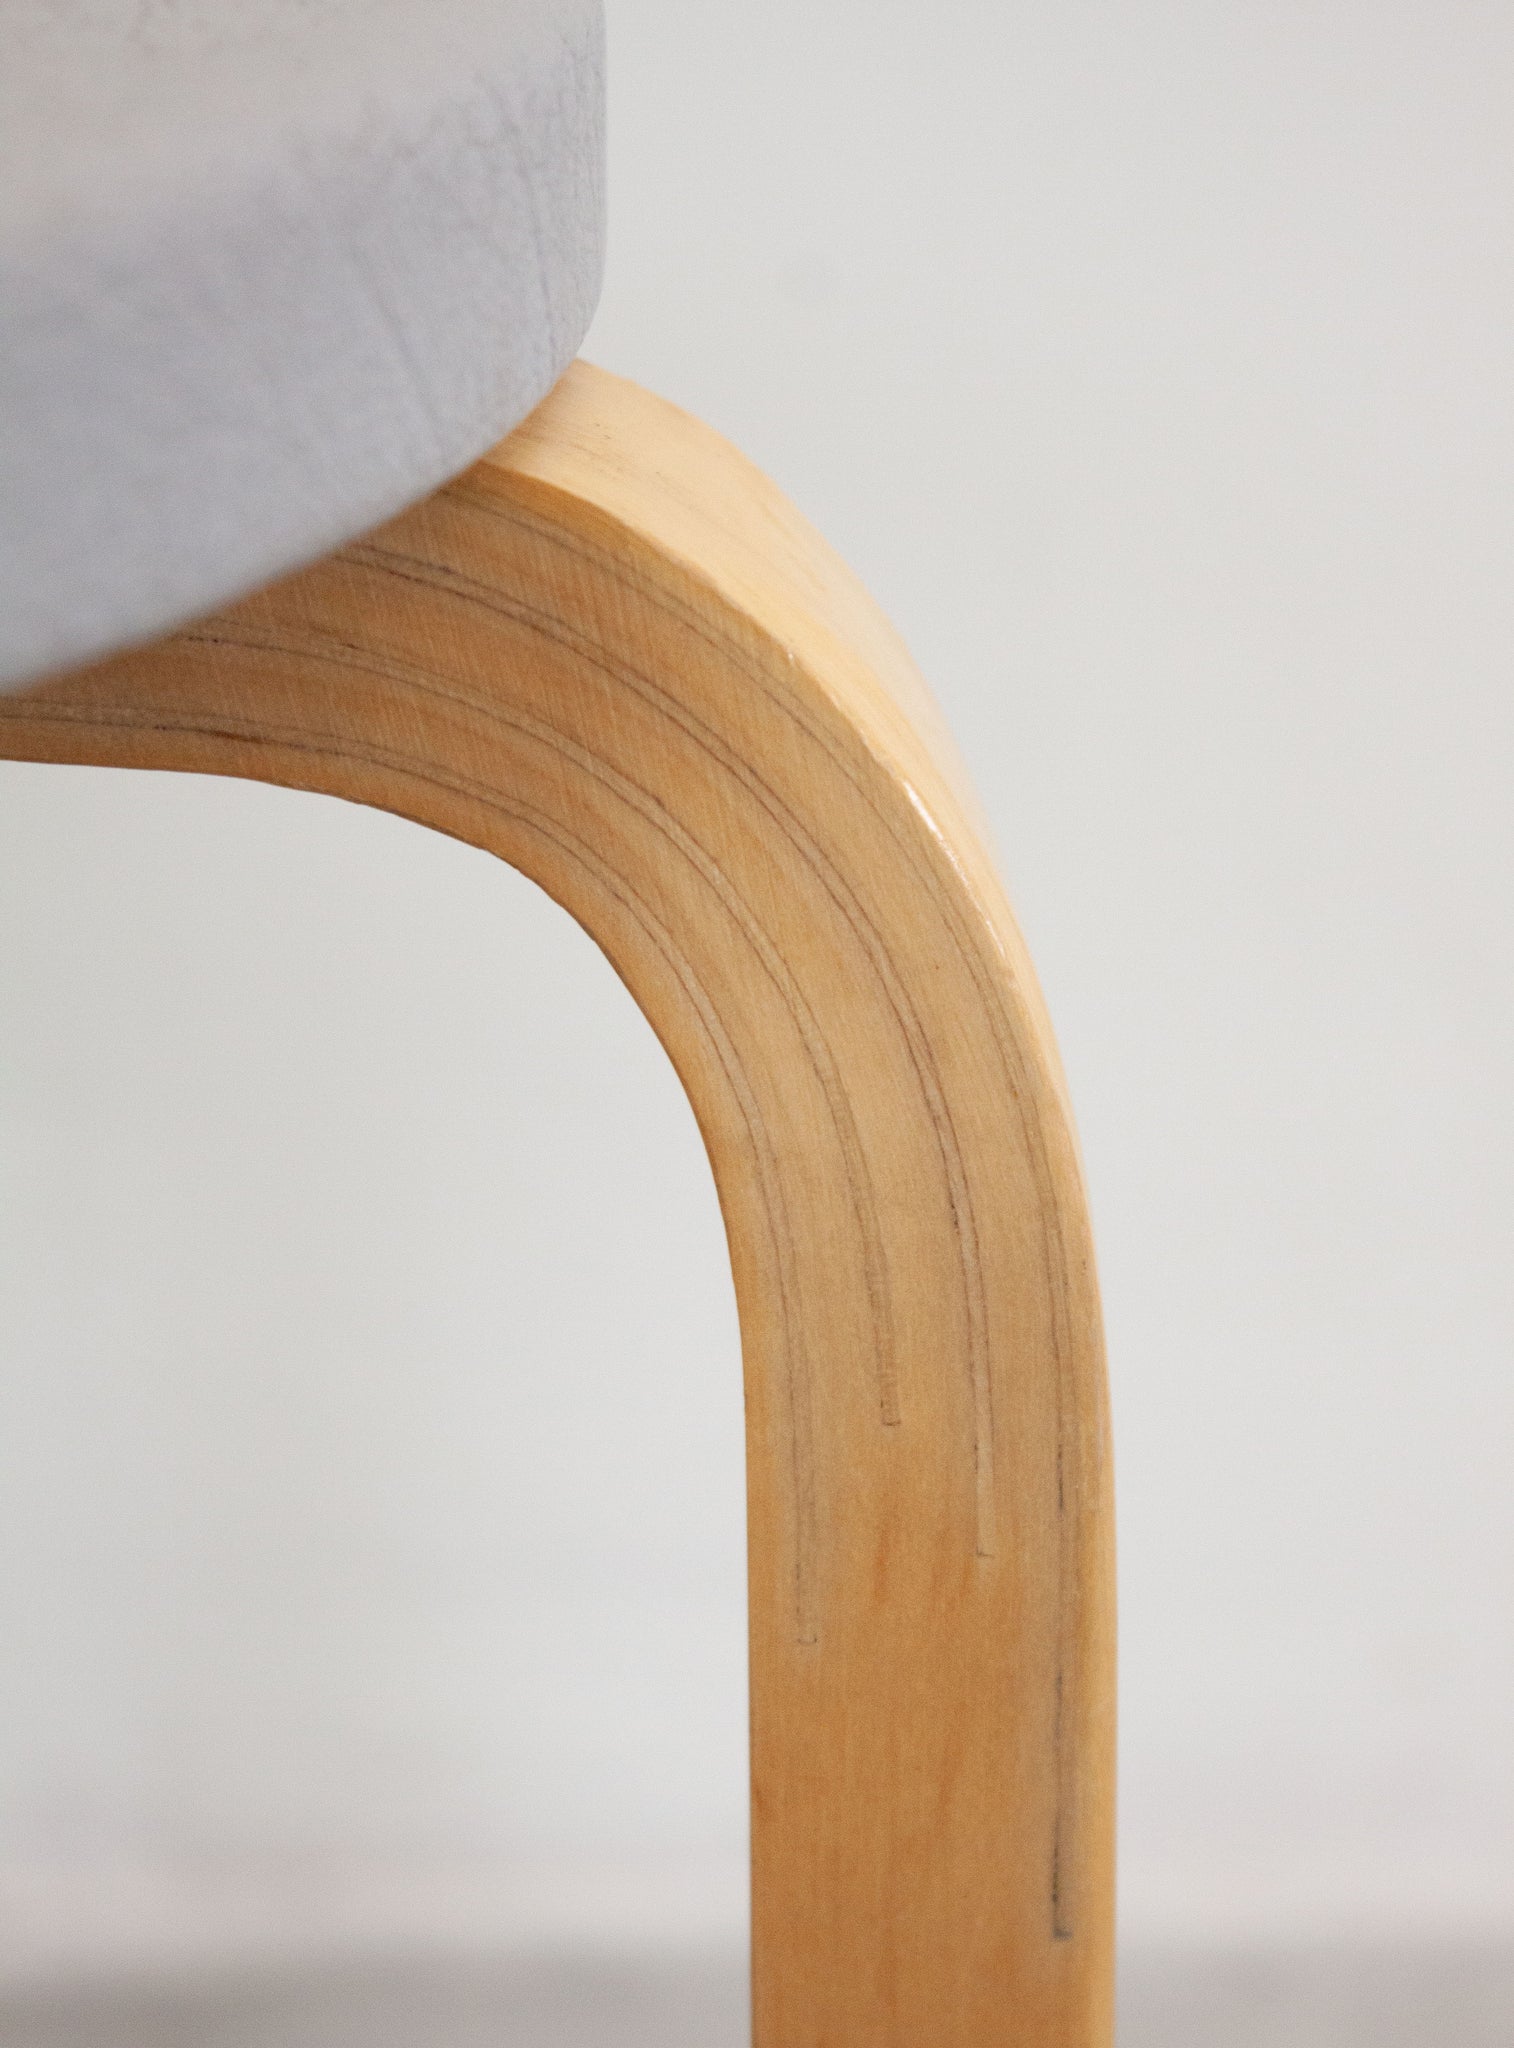 Artek Model 68 Chairs by Alvar Aalto (Grey)